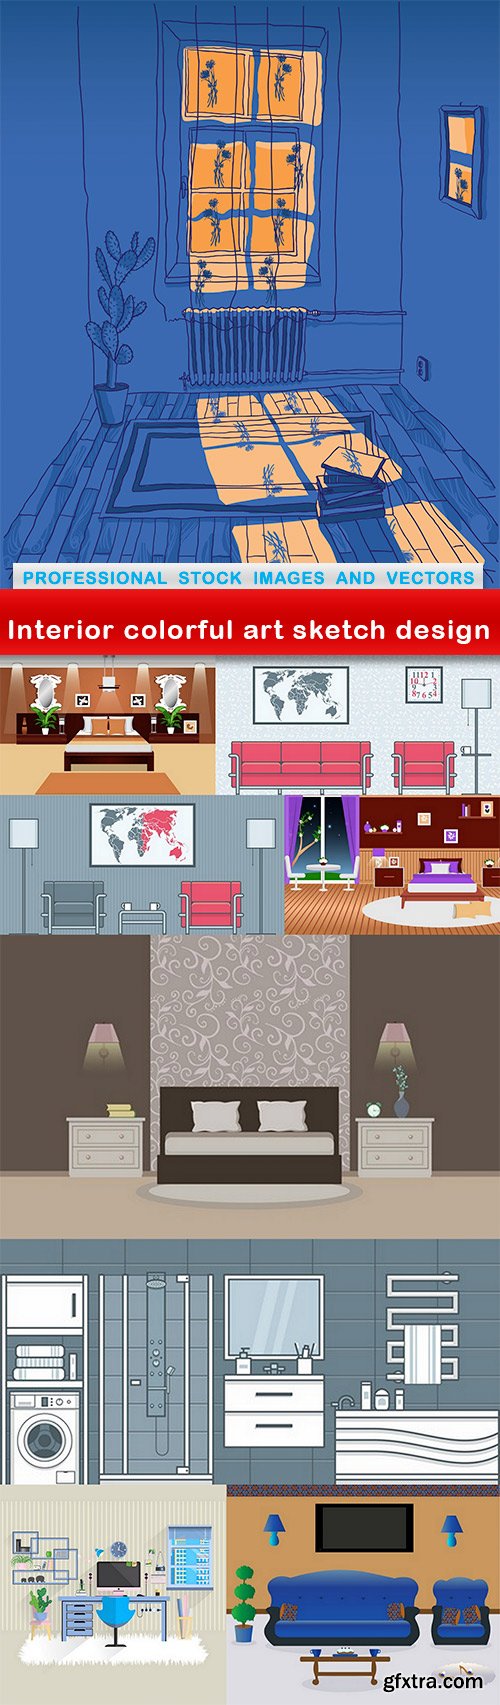 Interior colorful art sketch design - 9 EPS